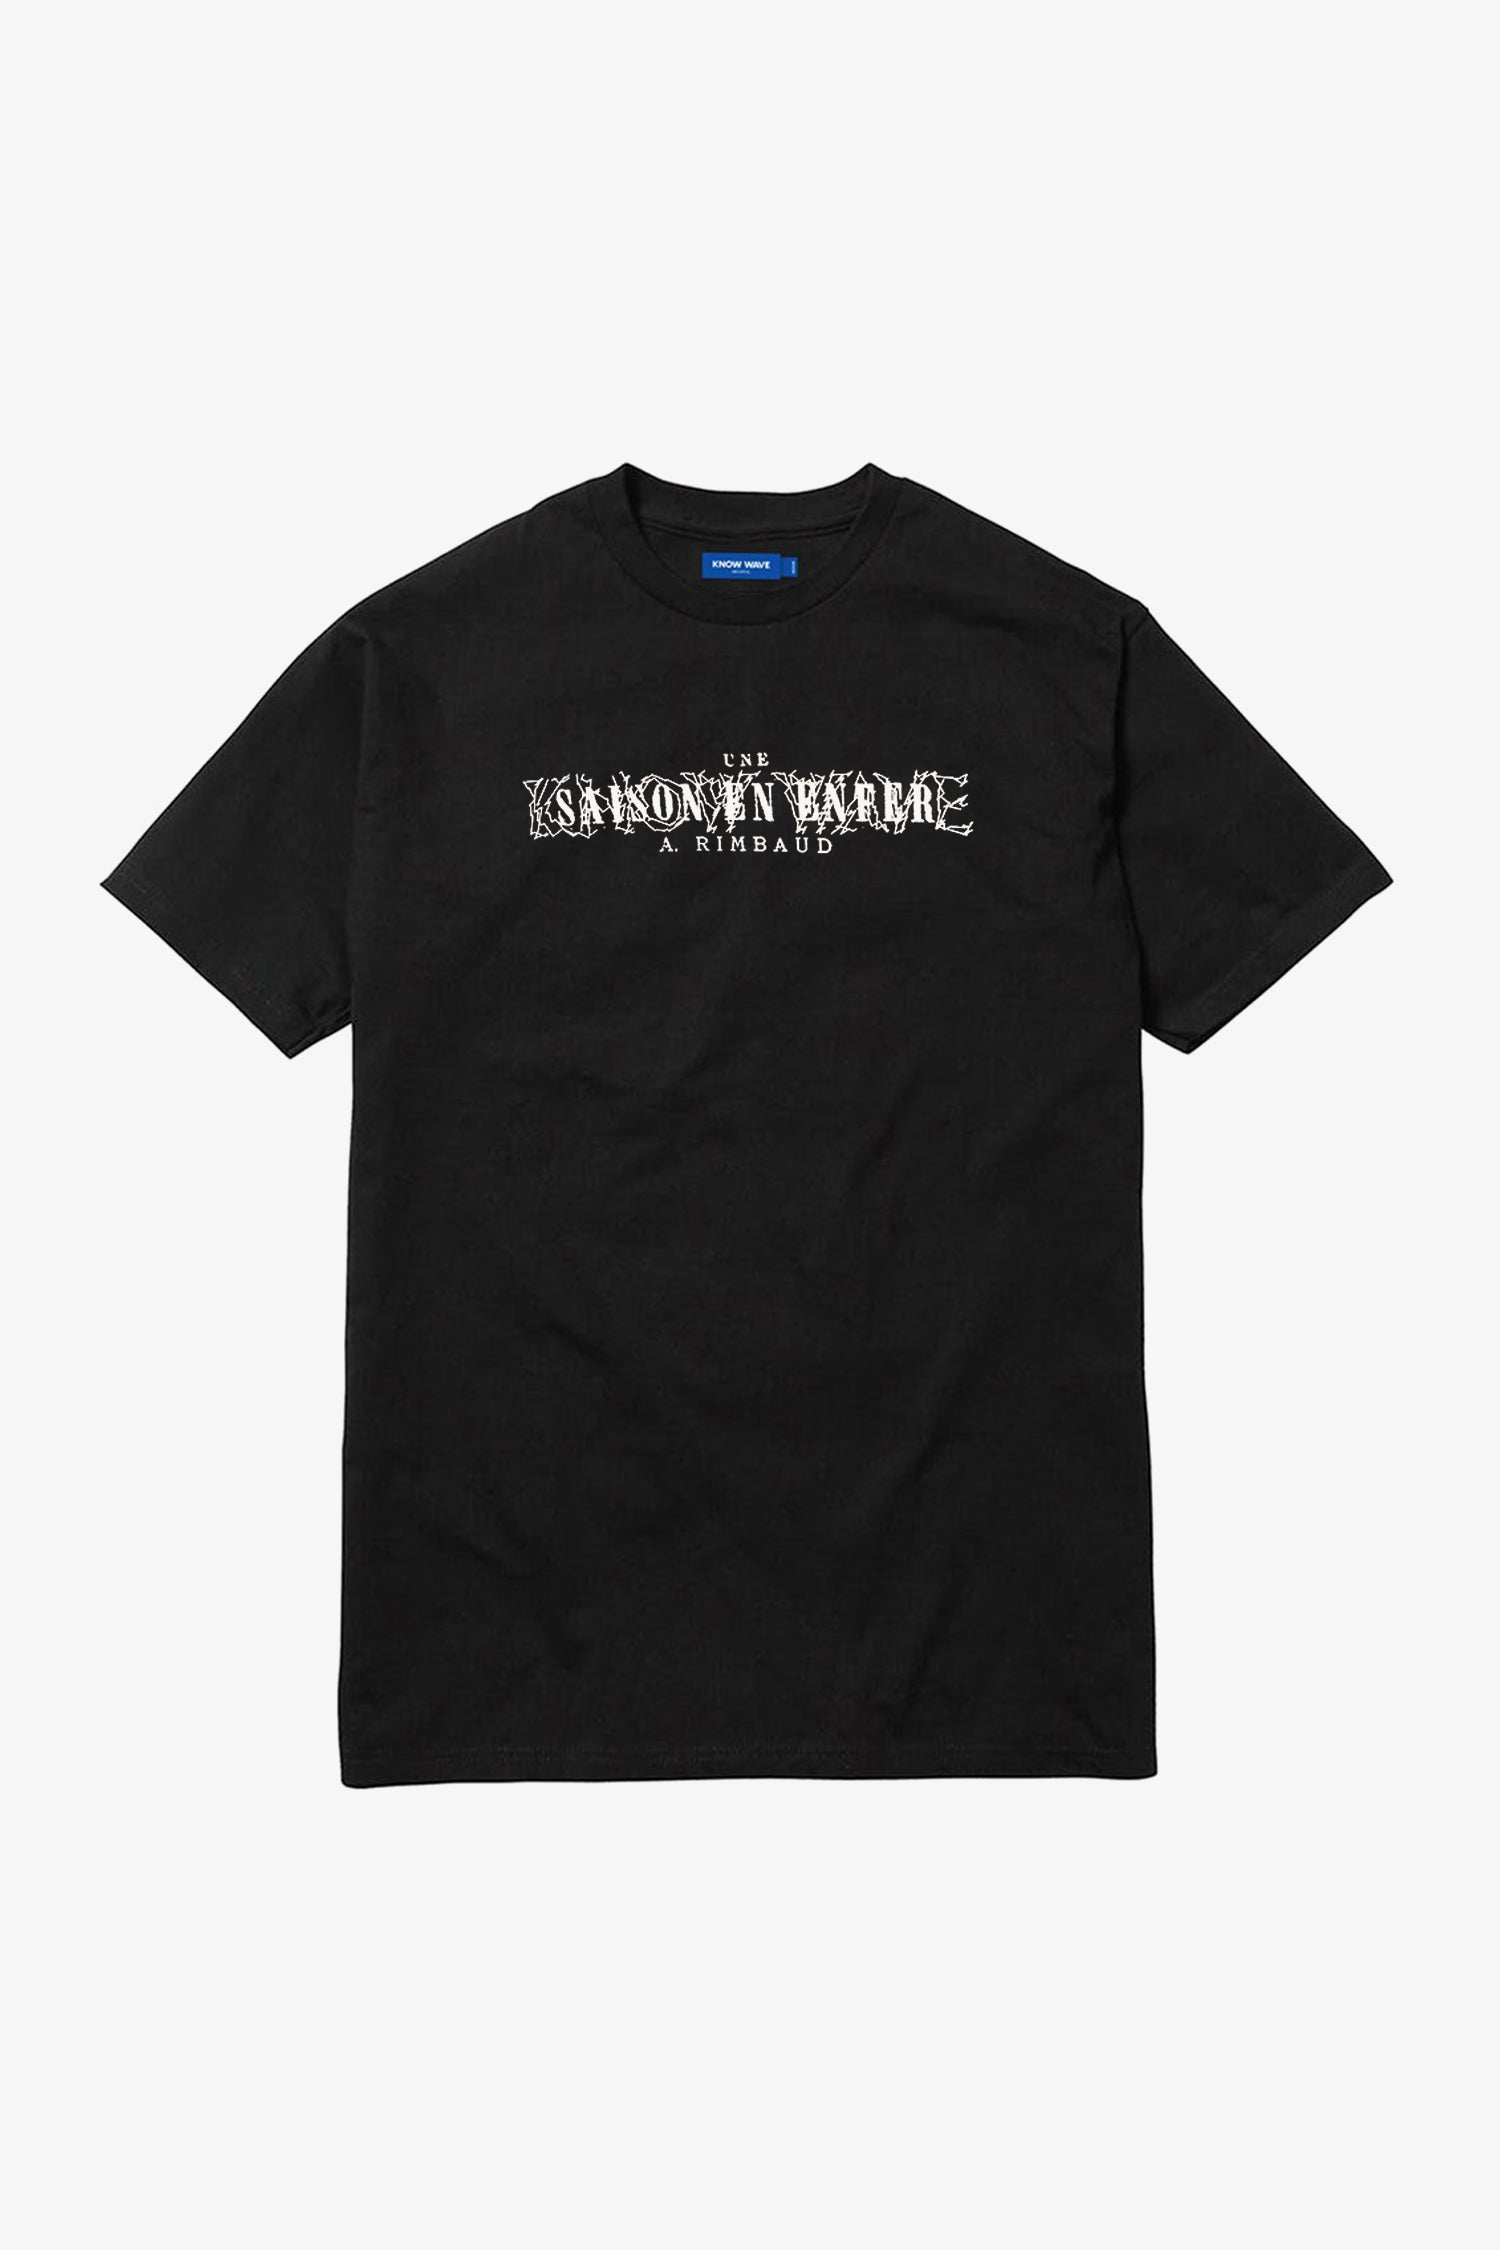 Selectshop FRAME - KNOW WAVE Rimbaud T-Shirt T-Shirt Dubai